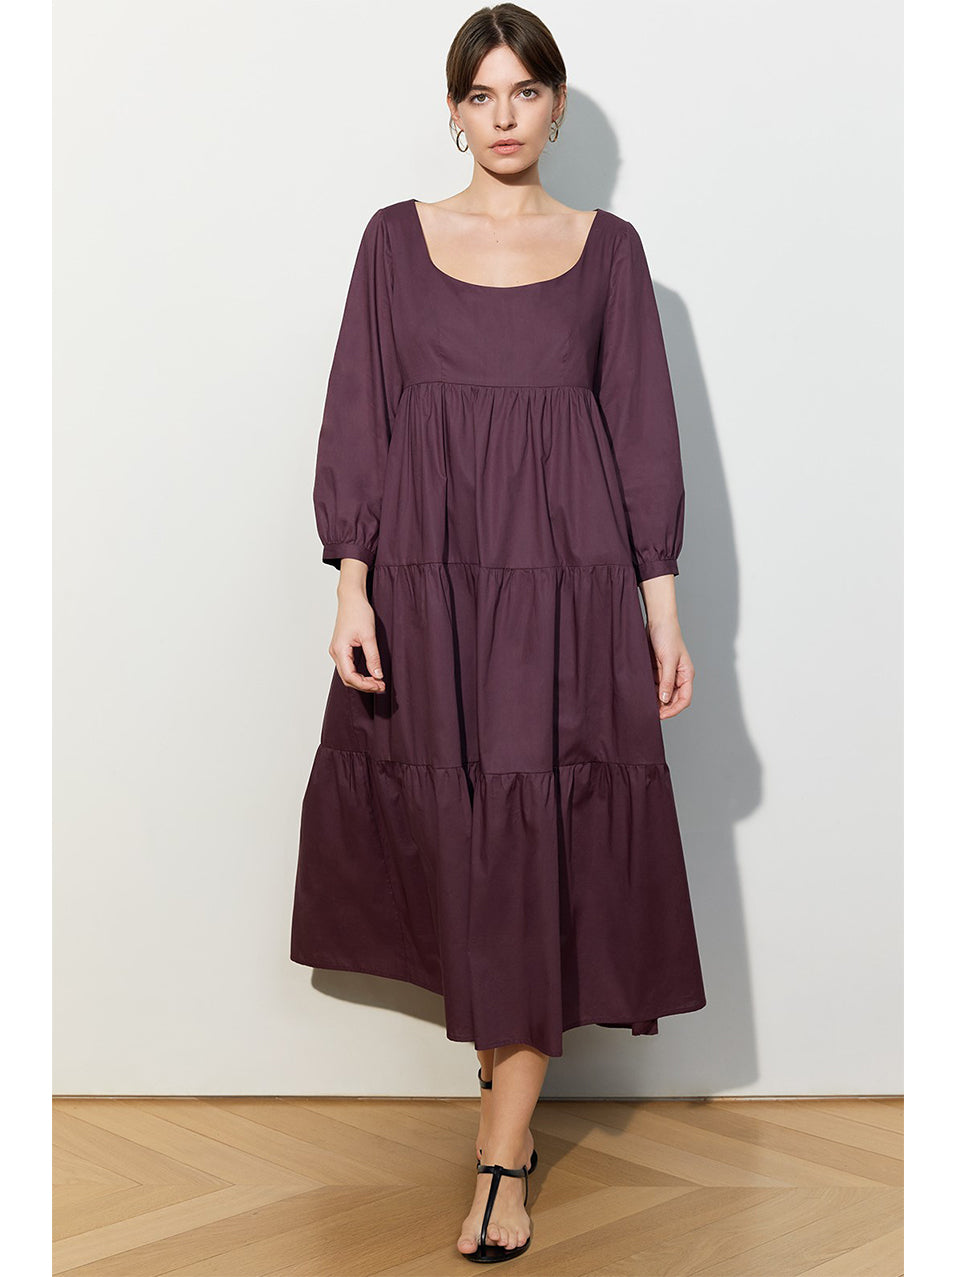 Kiki - Burgundy Cotton Dress - Mondo Corsini